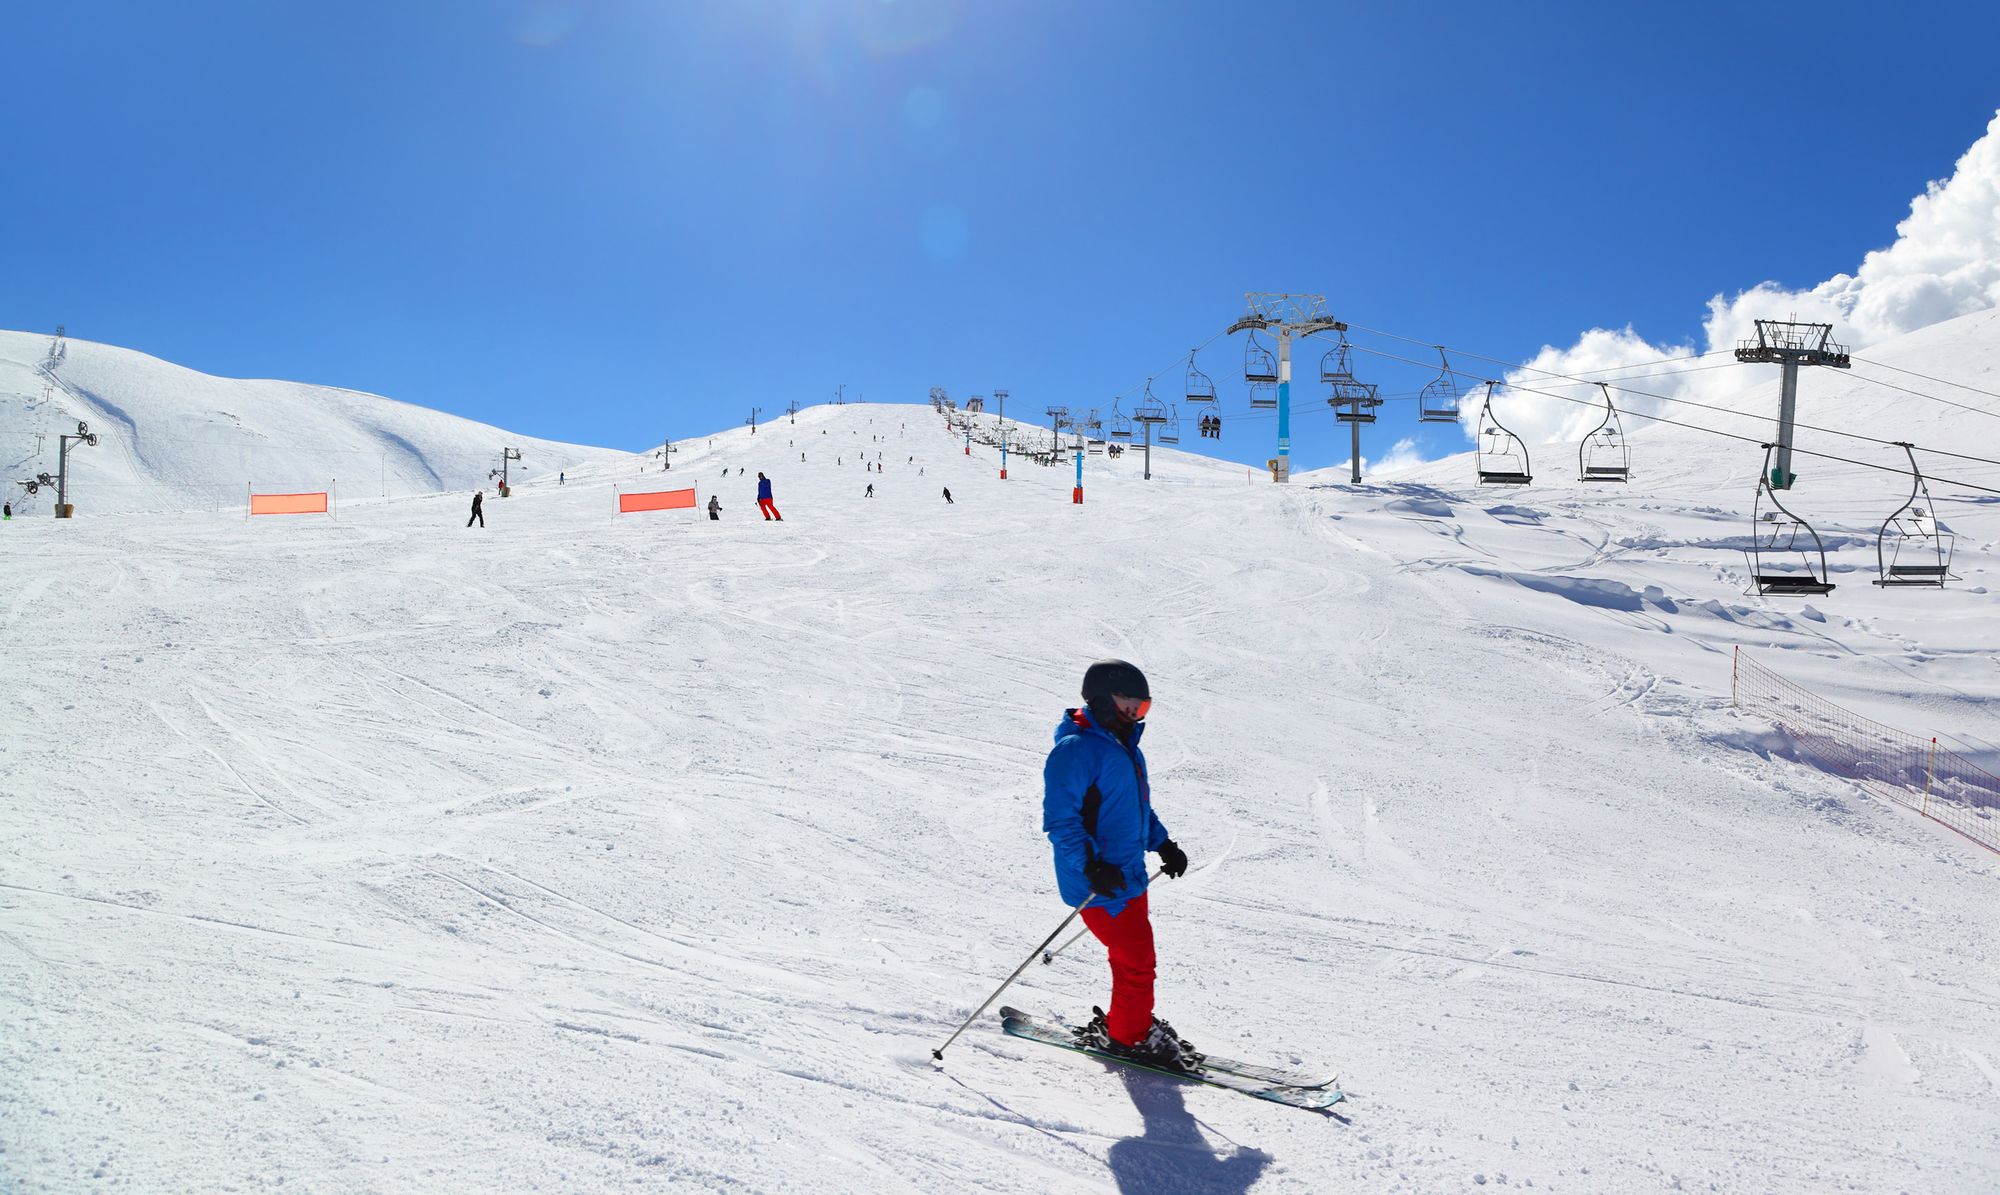 Plan Your Next Ski Trip with flydubai Before the Snow Melts